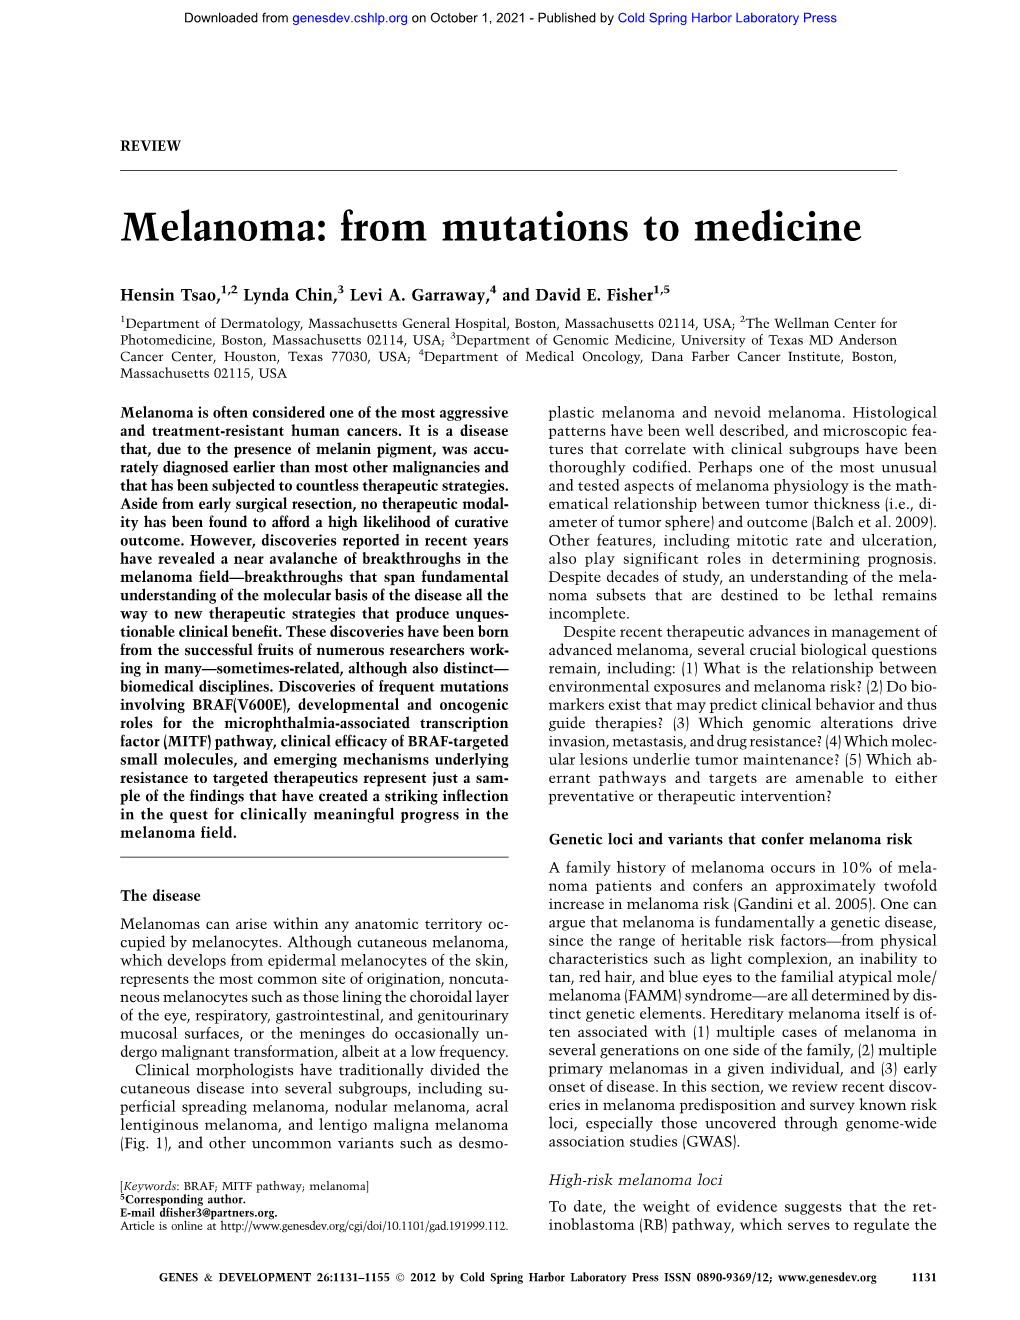 Melanoma: from Mutations to Medicine